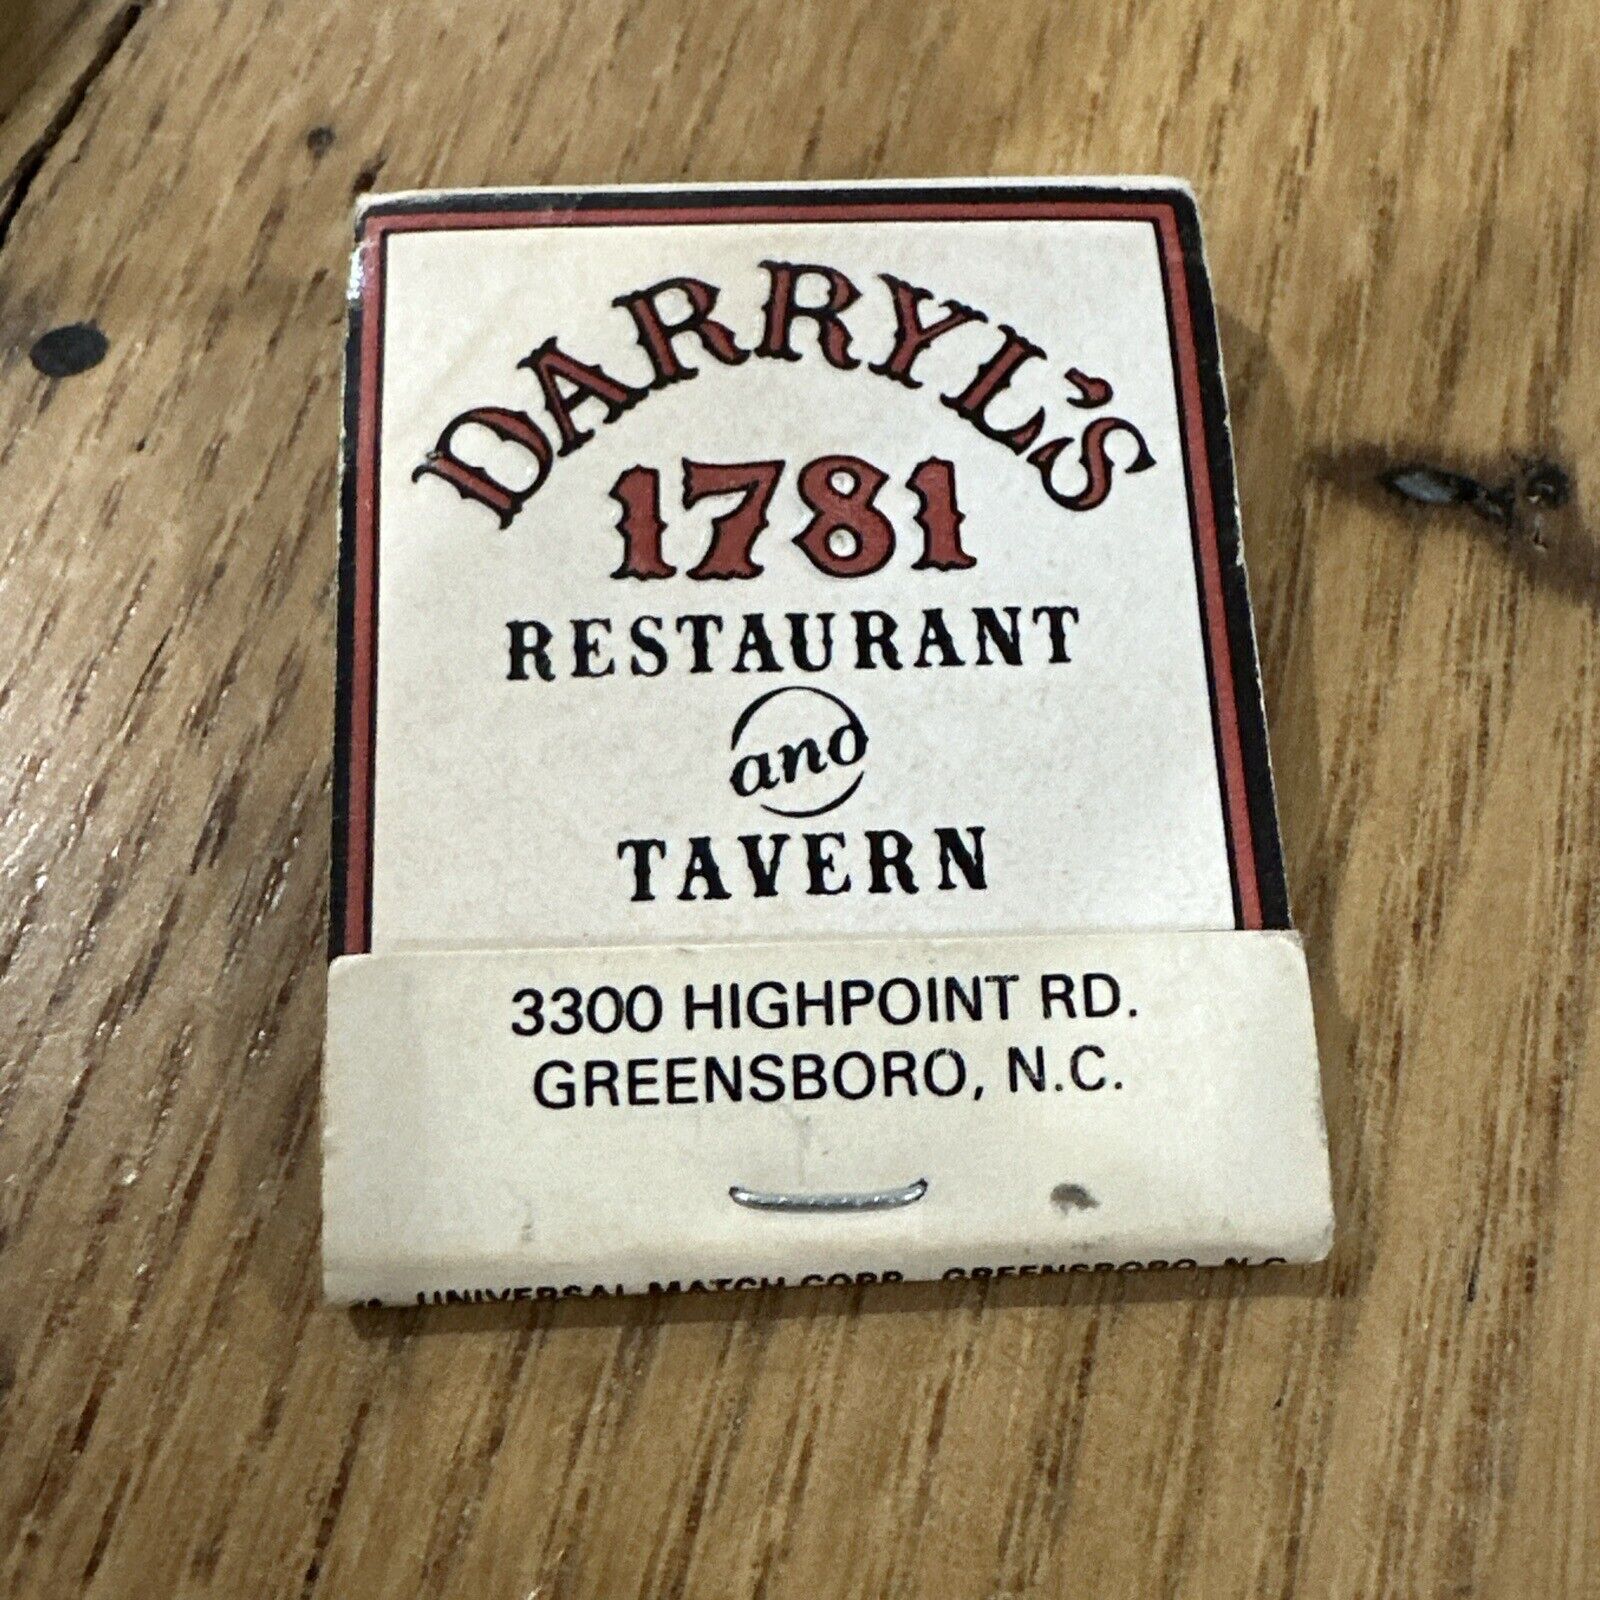 Vintage Matchbook - Darryl’s 1781 Restaurant Bar - Greensboro, NC